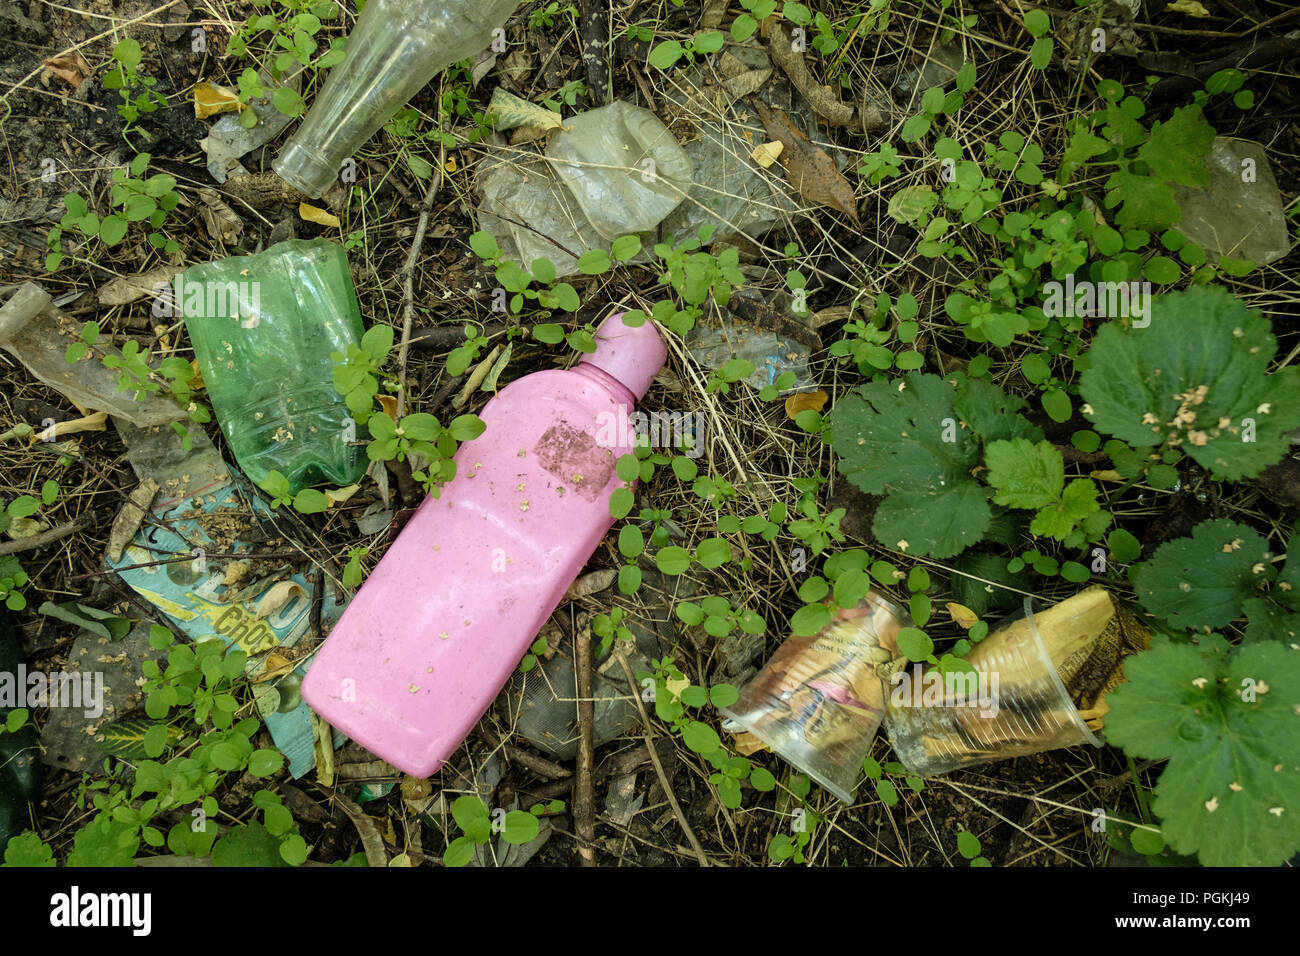 Plastic debris pollutes the nature. Plastic bottle. Stock Photo